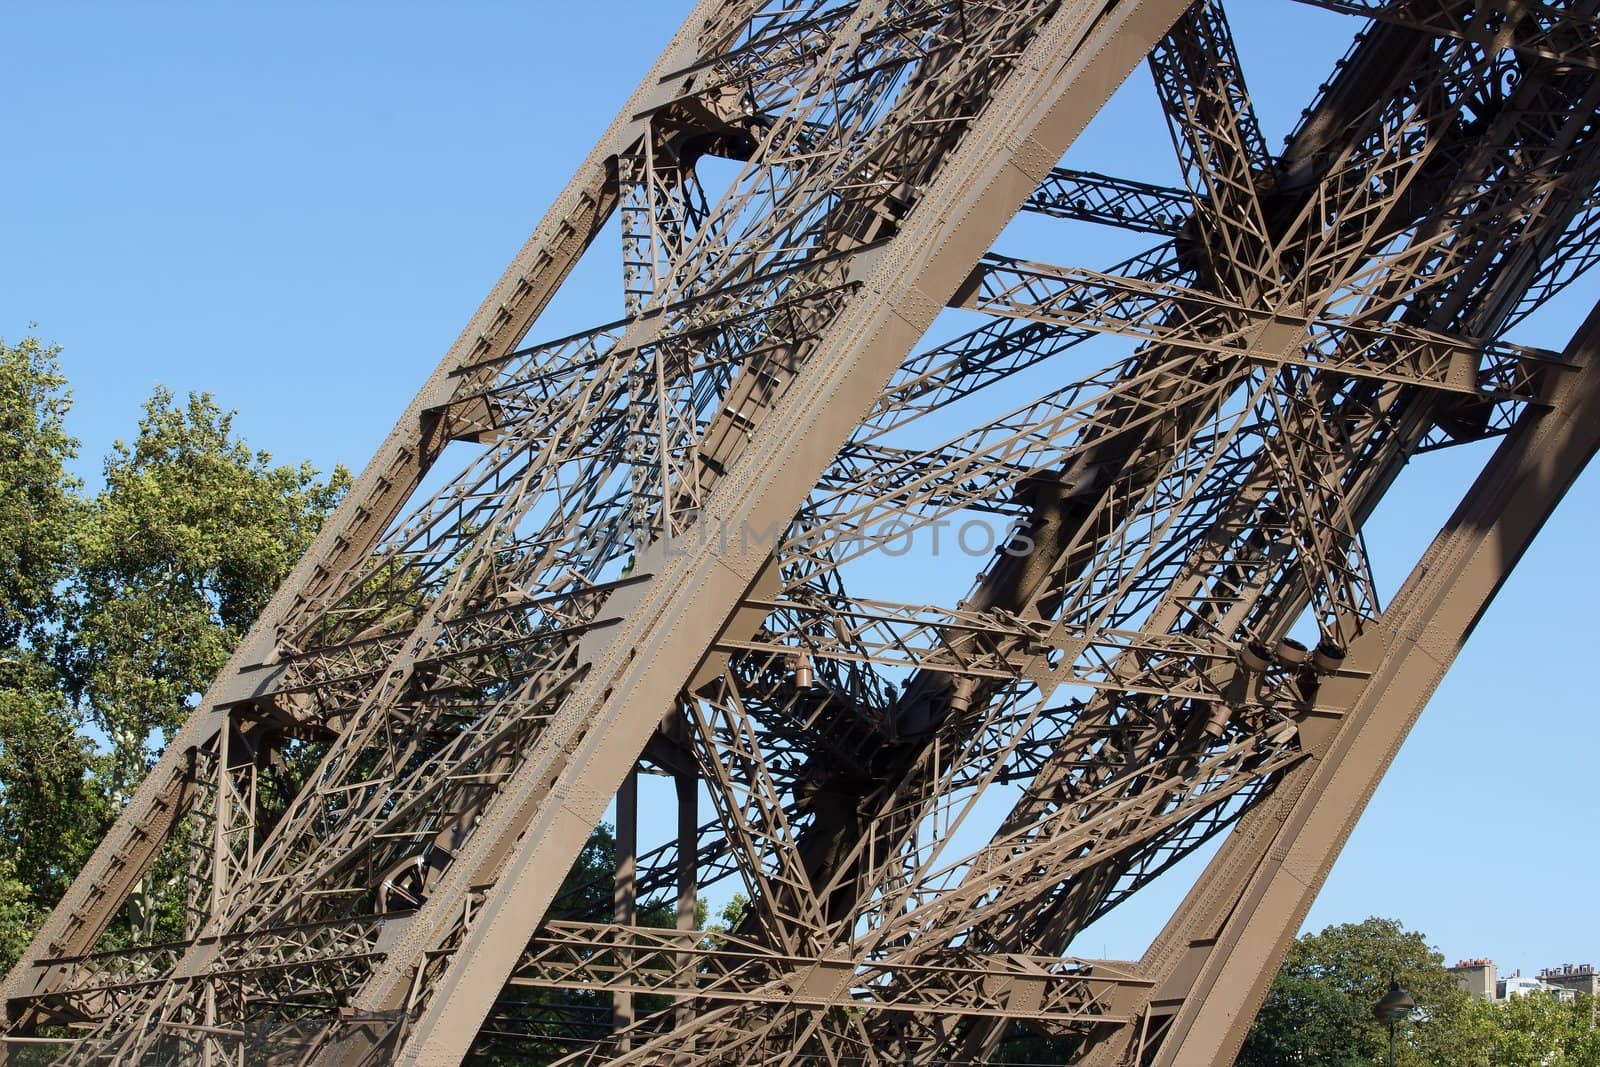 one of the pillars of the Eiffel Tower   Paris France by neko92vl